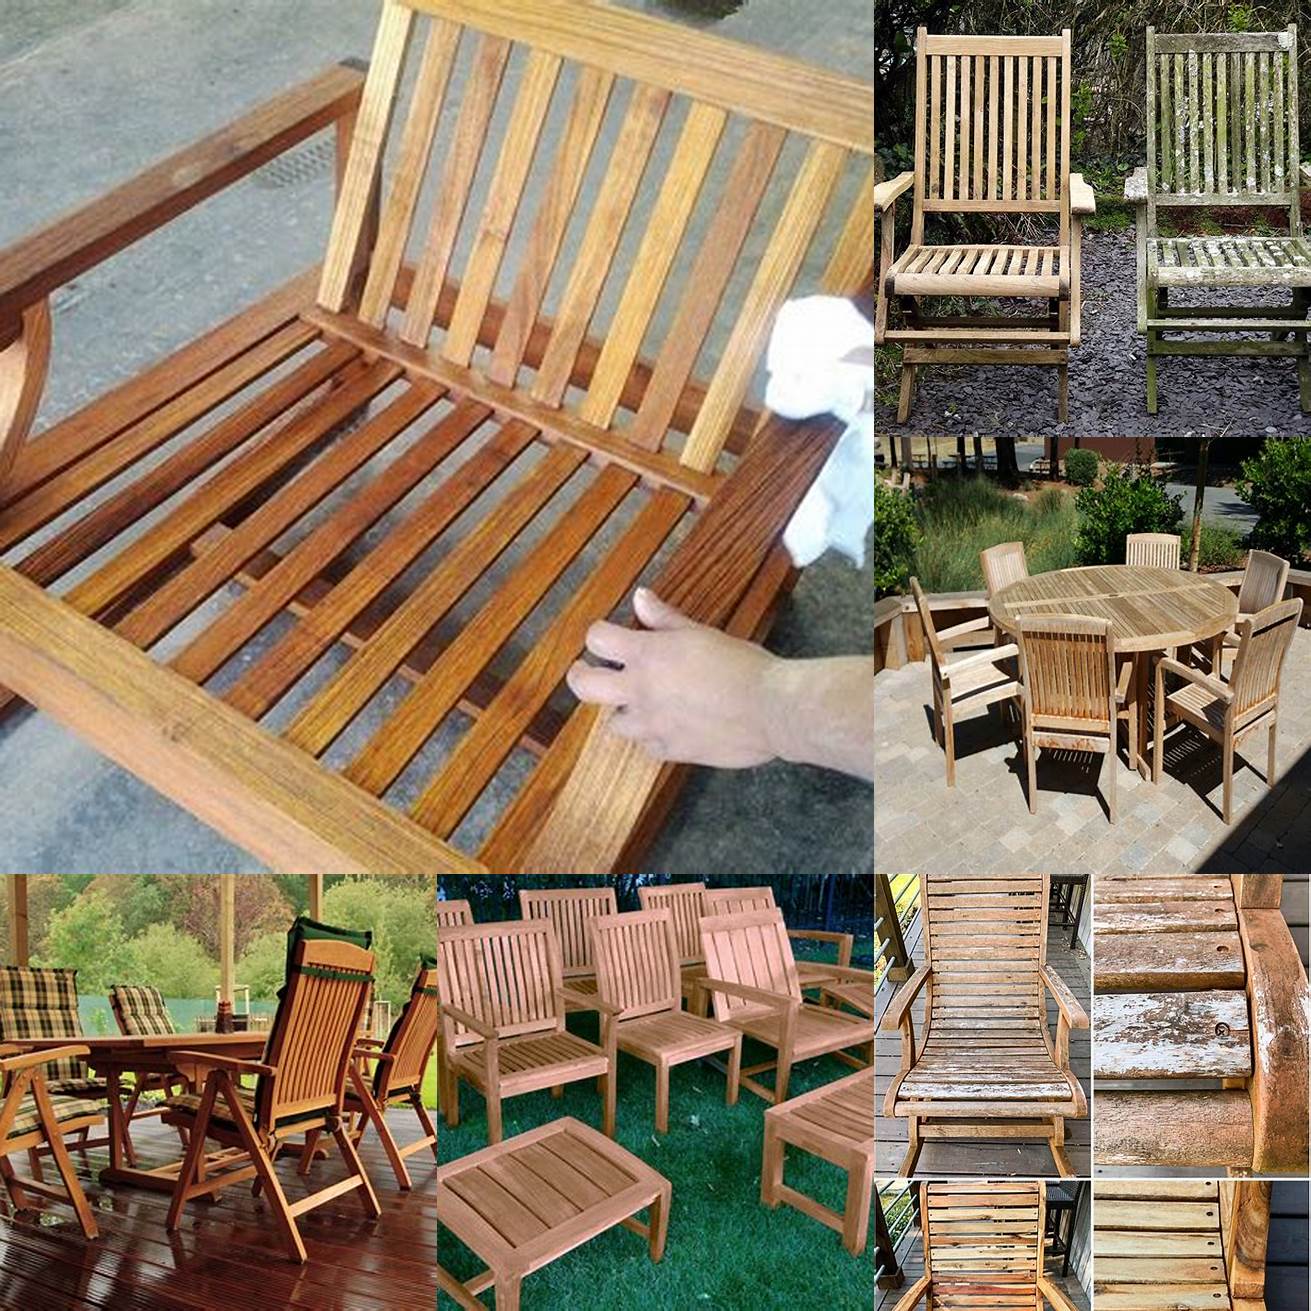 Maintaining teak wood furniture